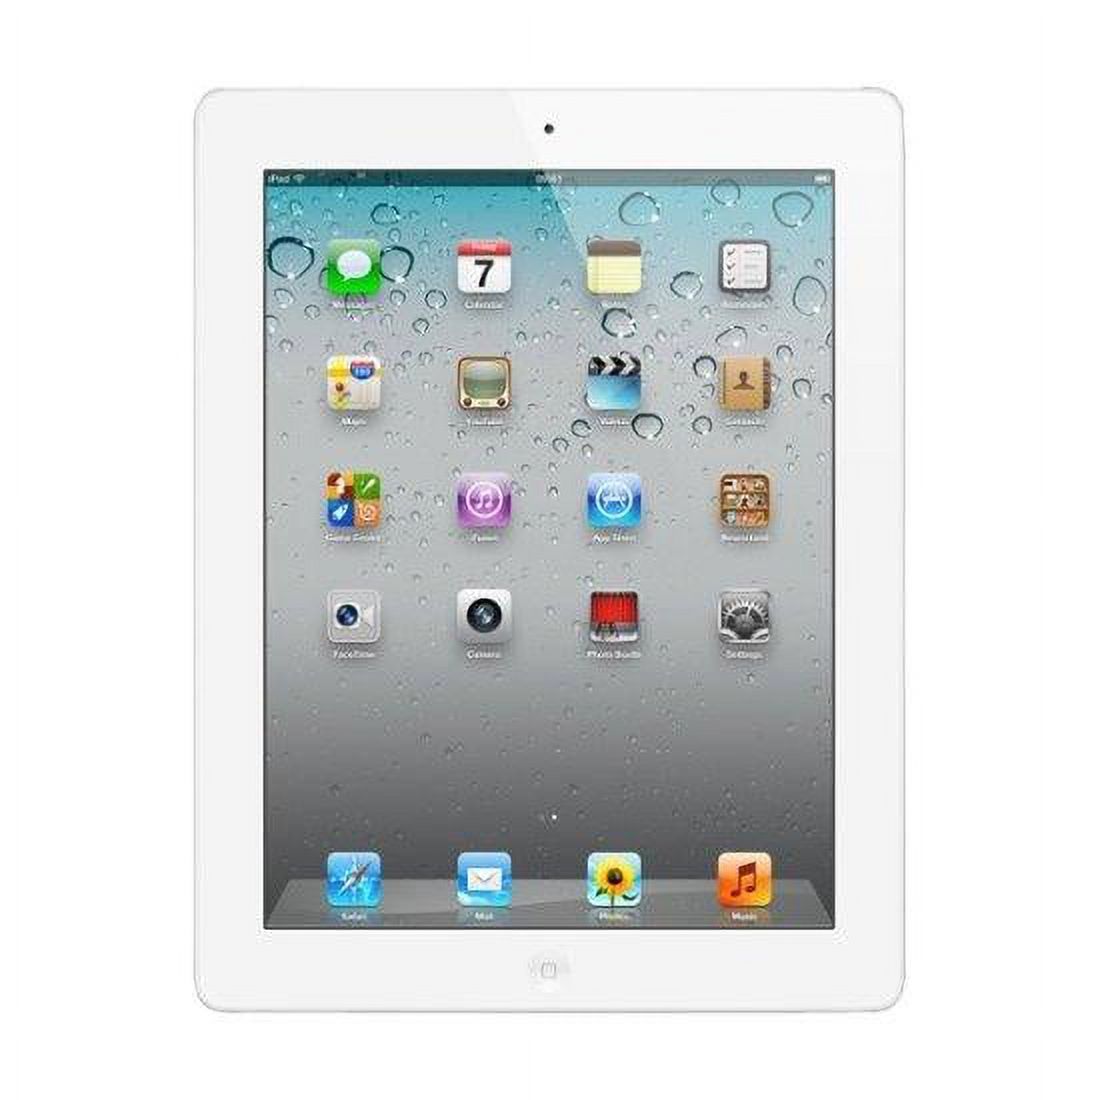 Restored Apple iPad 2 16GB, Wi-Fi, 9.7in - White - (MC979LL/A) (Refurbished) - image 1 of 4